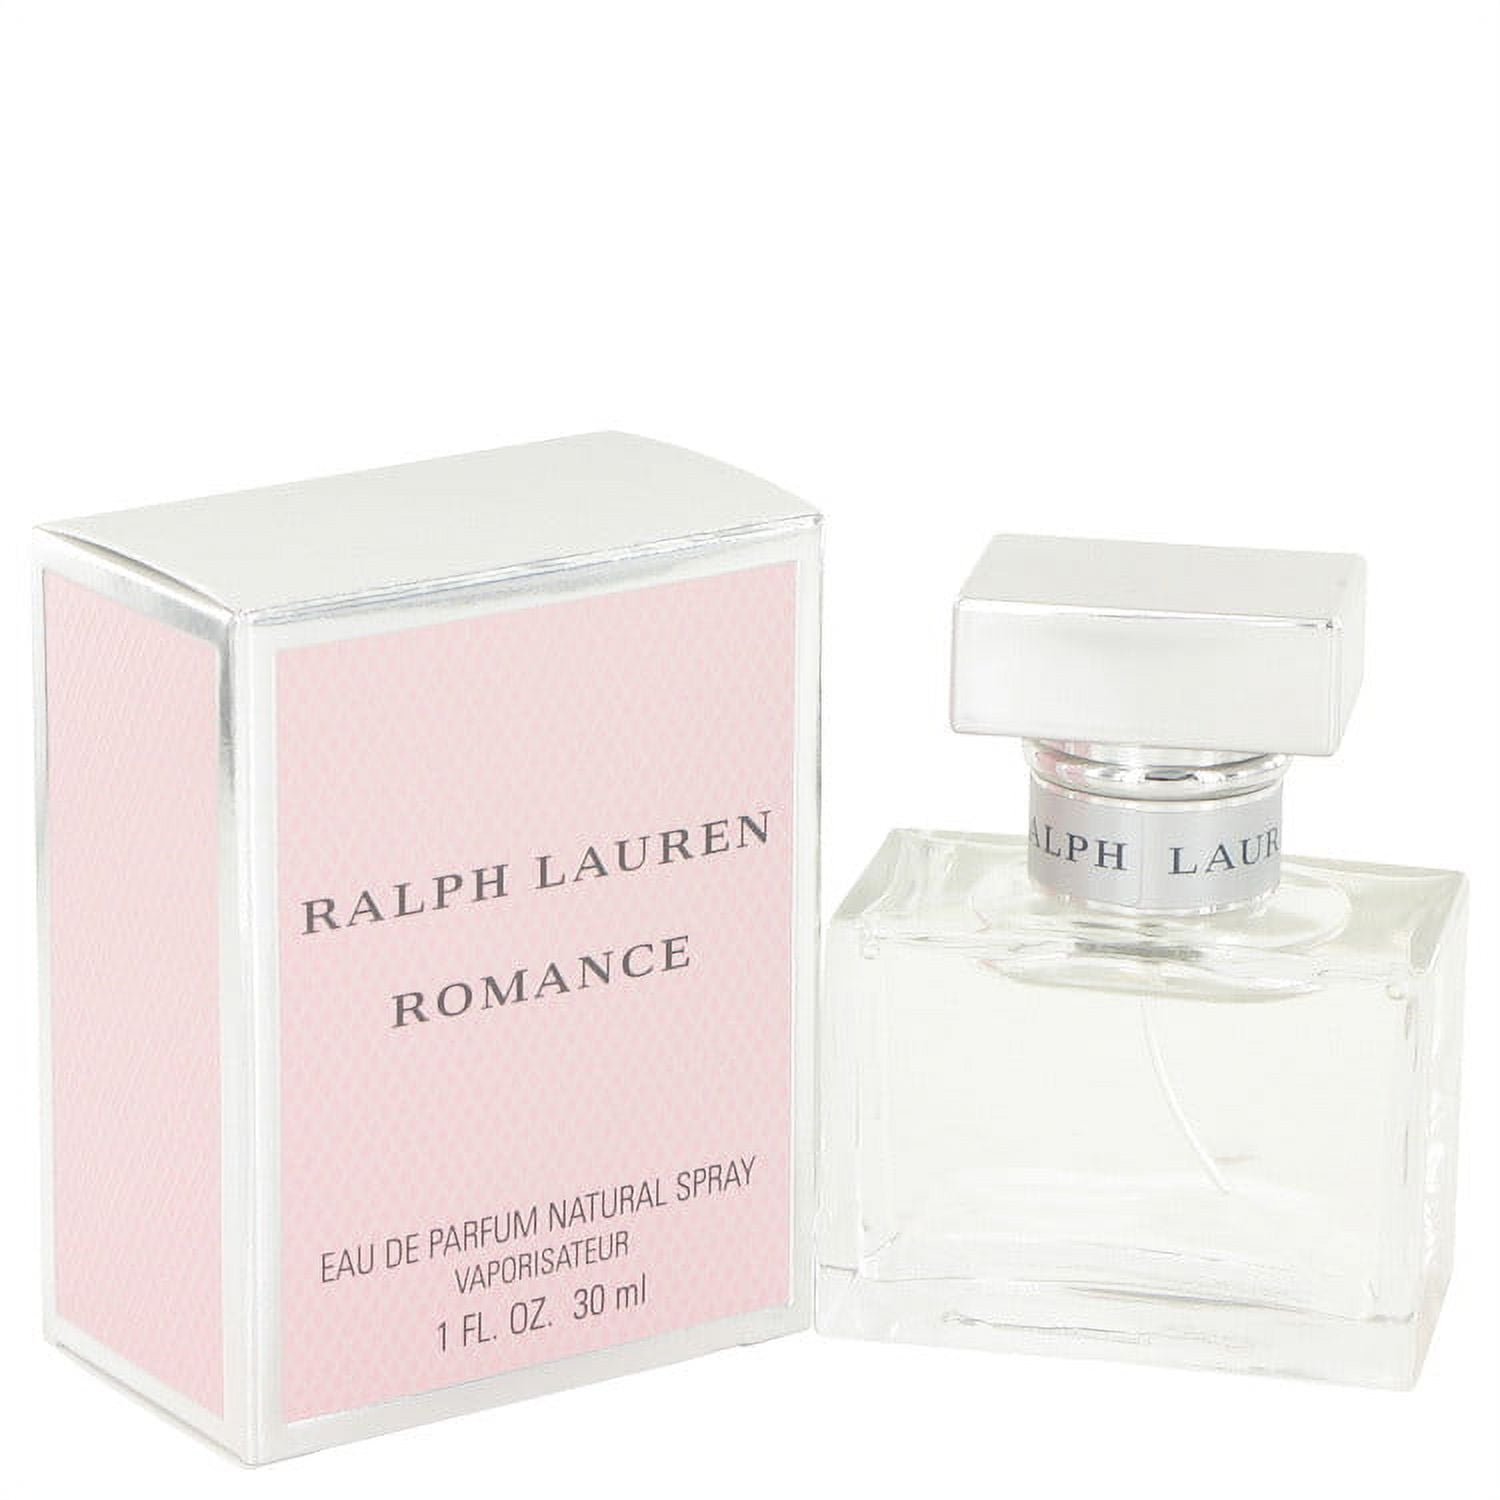 ROMANCE by Ralph Lauren Eau De Parfum Spray 1 oz And a Mystery Name brand  sample vile